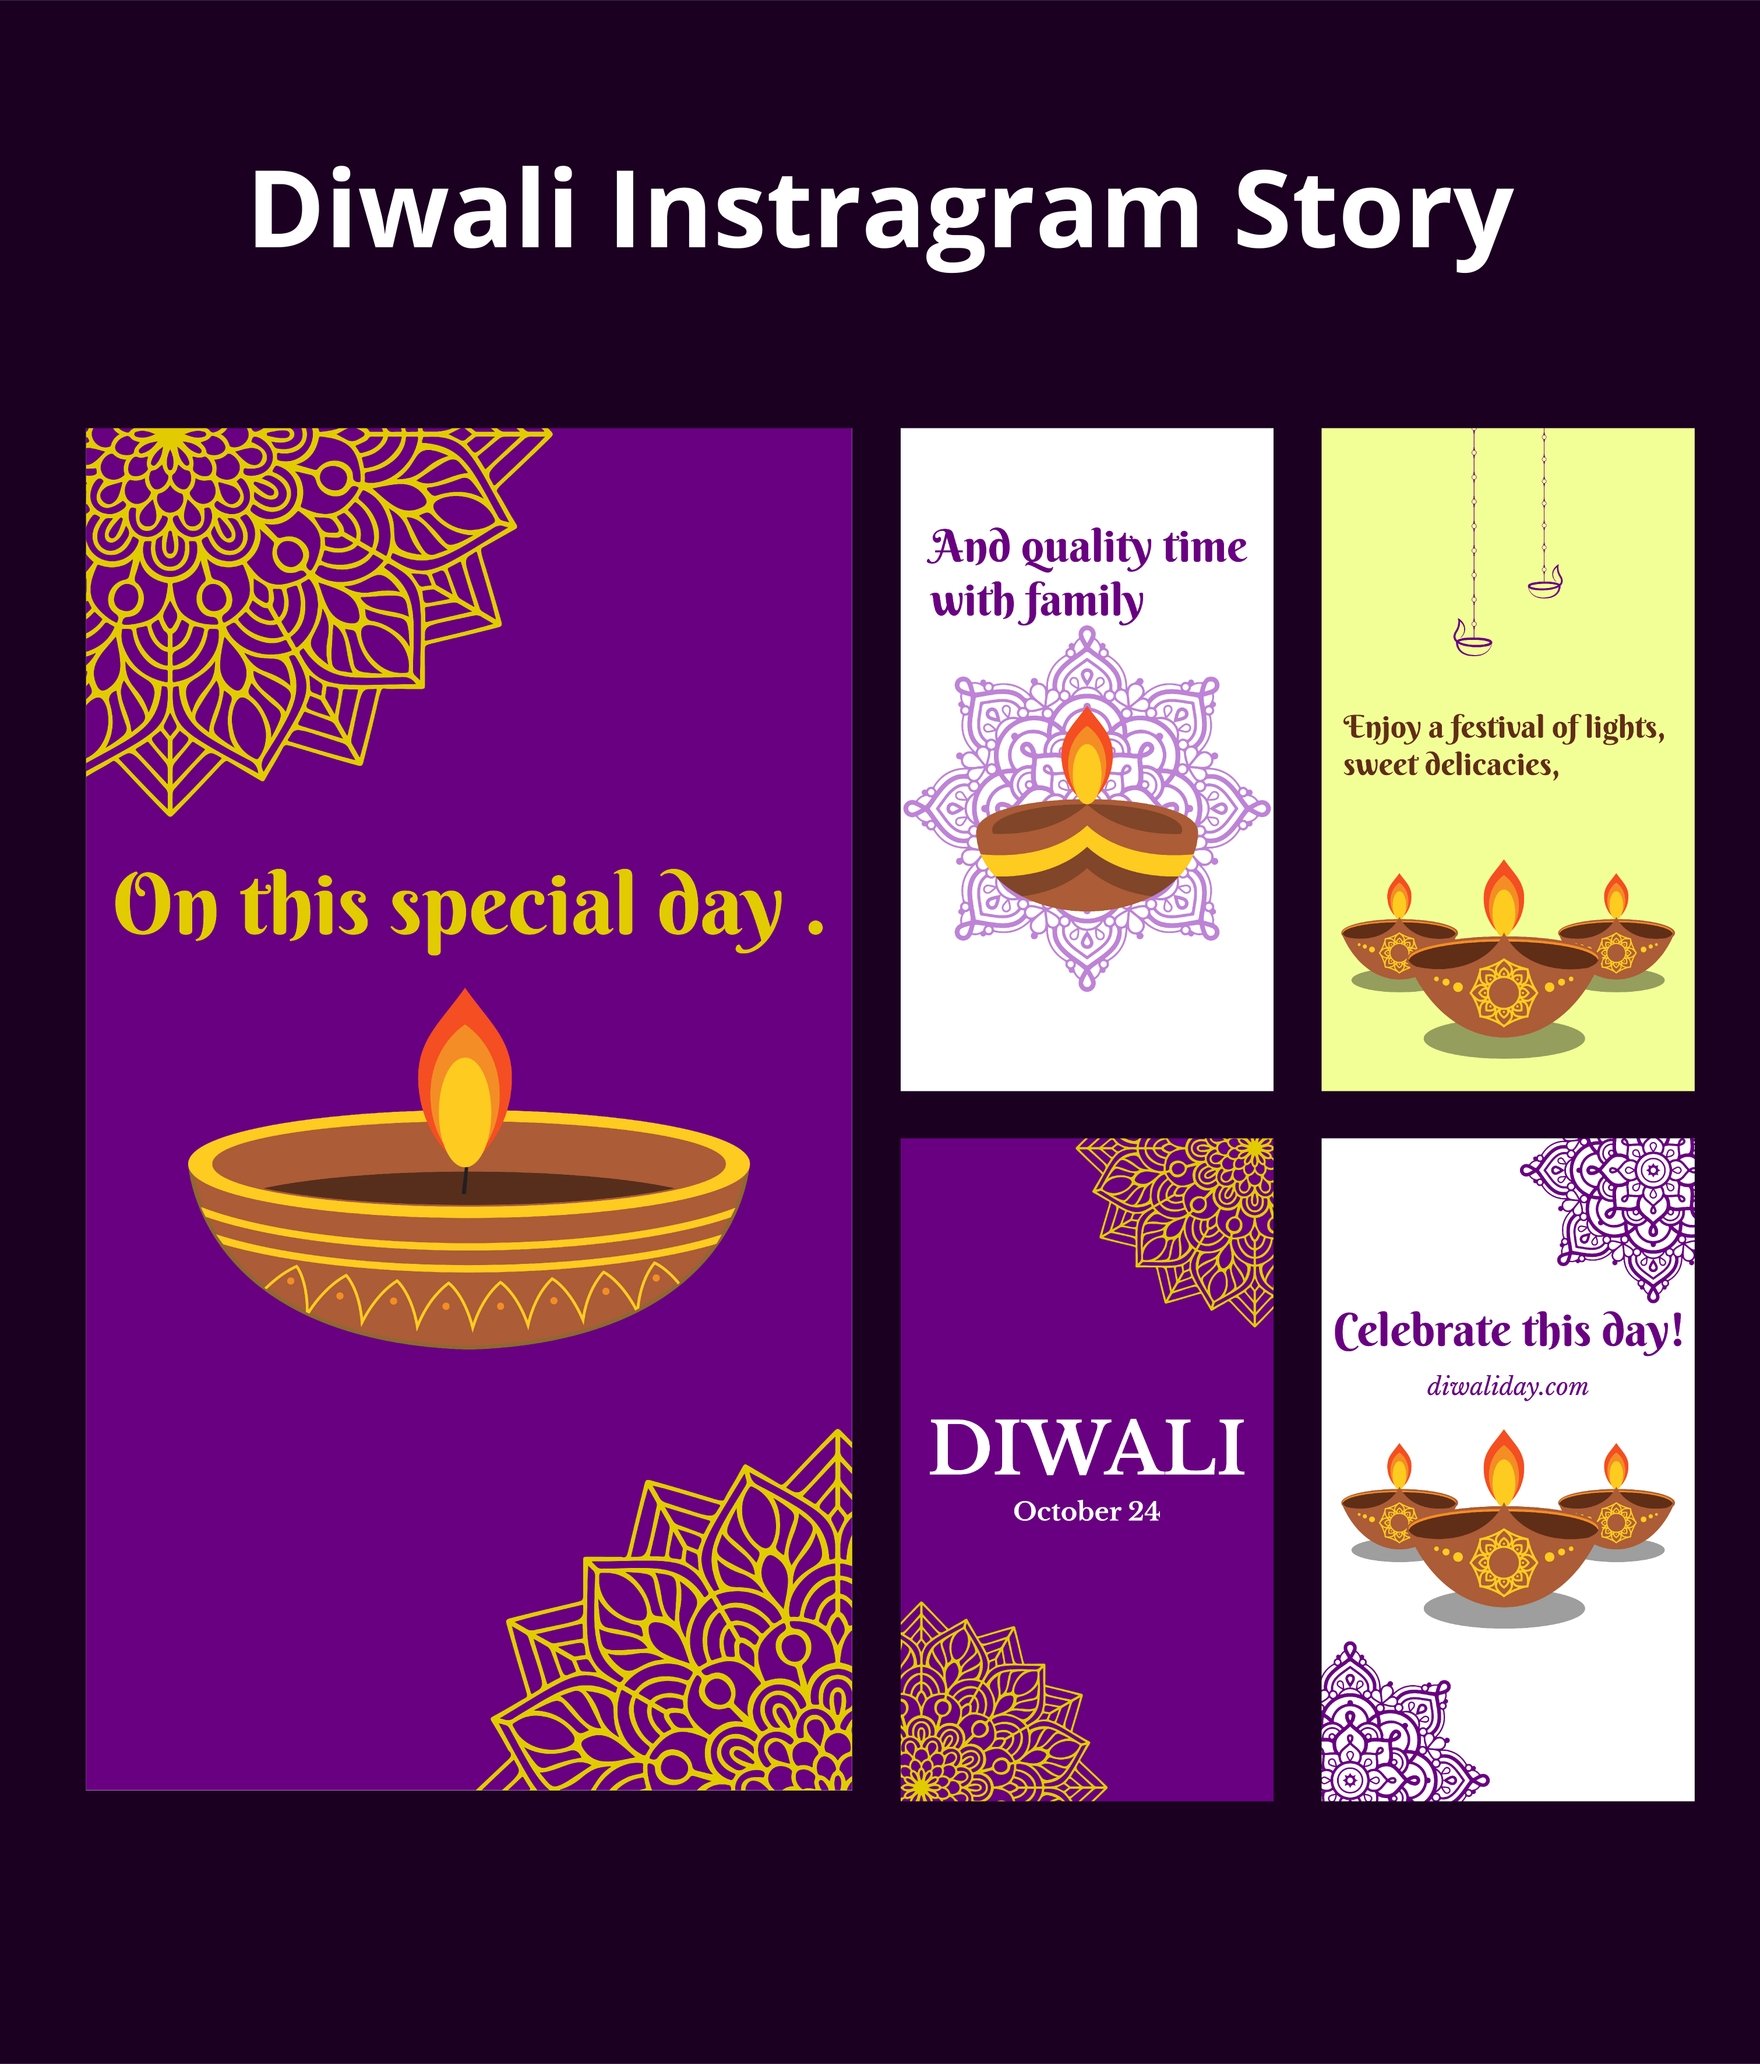 Diwali Instragram Story in Illustrator, PSD, EPS, SVG, JPG, PNG